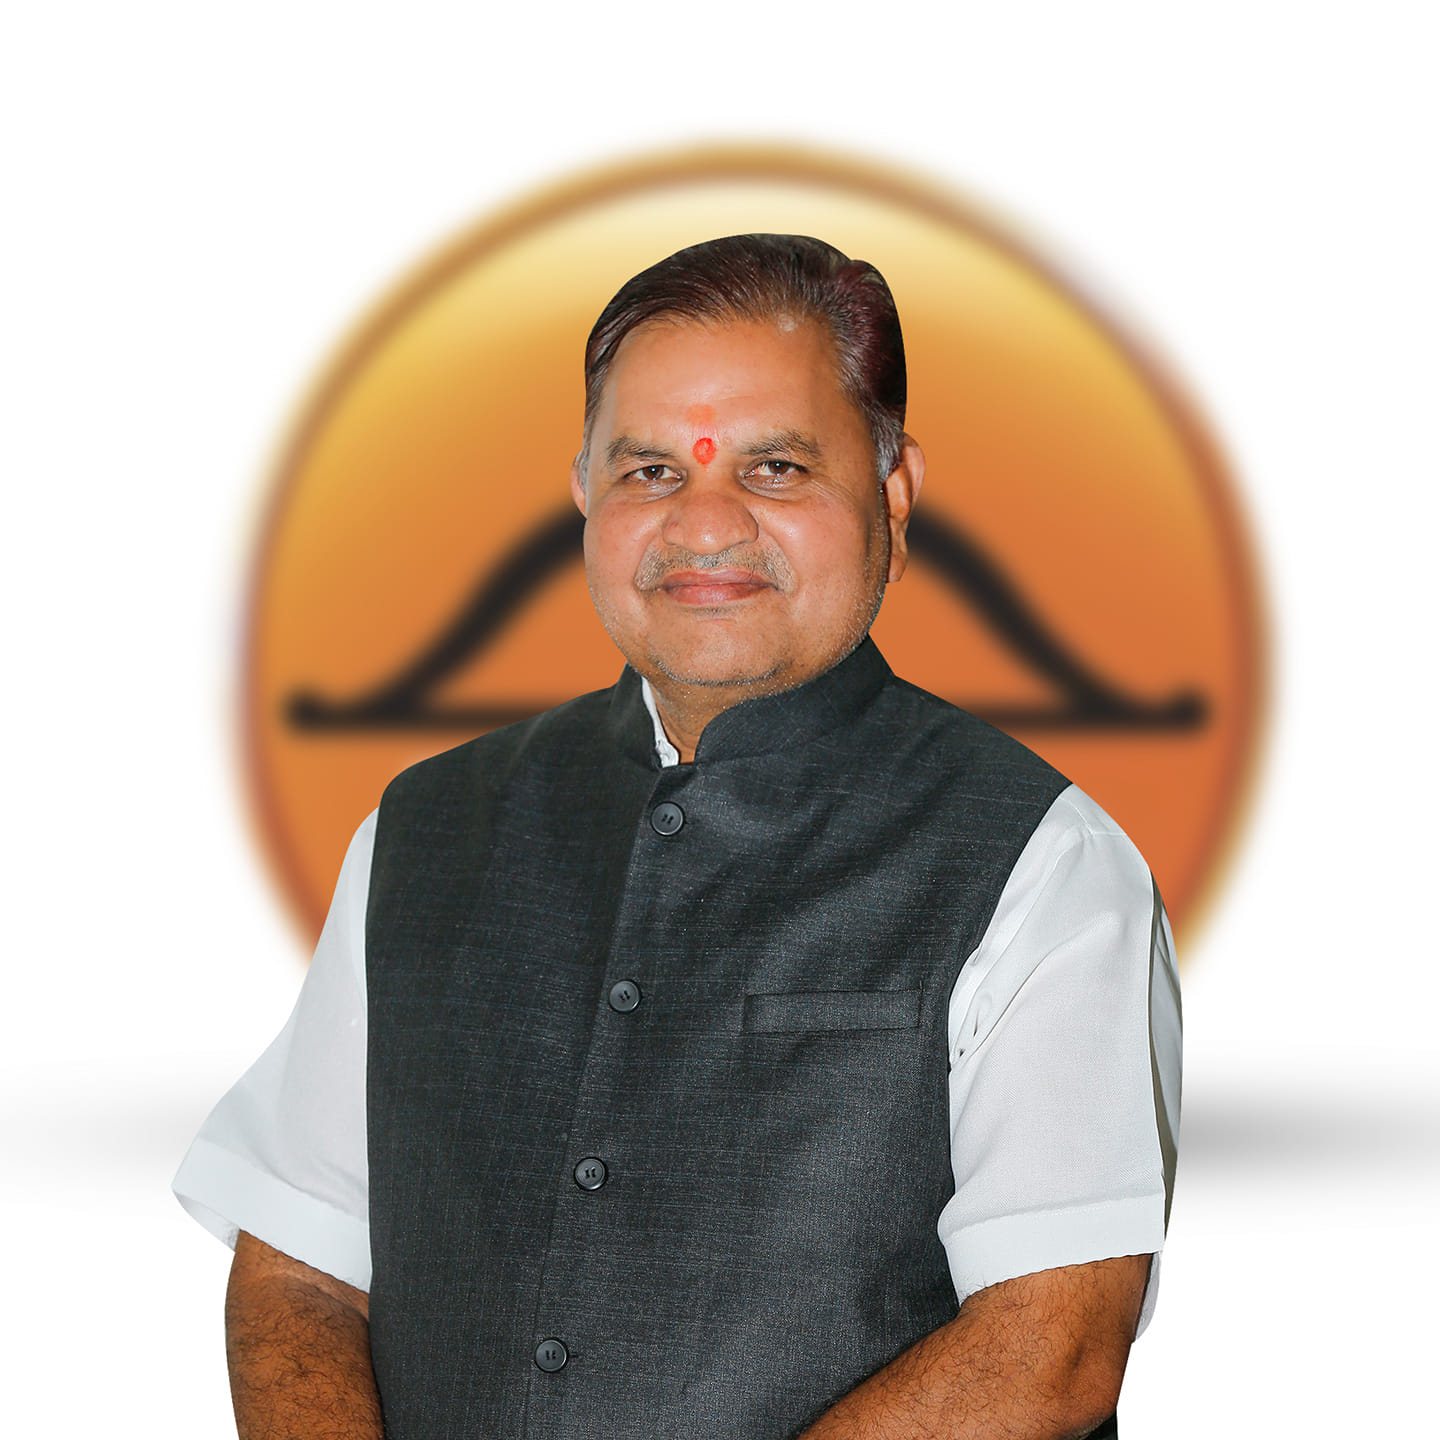 Eknath Shinde Shivsena Political Crisis Maharashtra